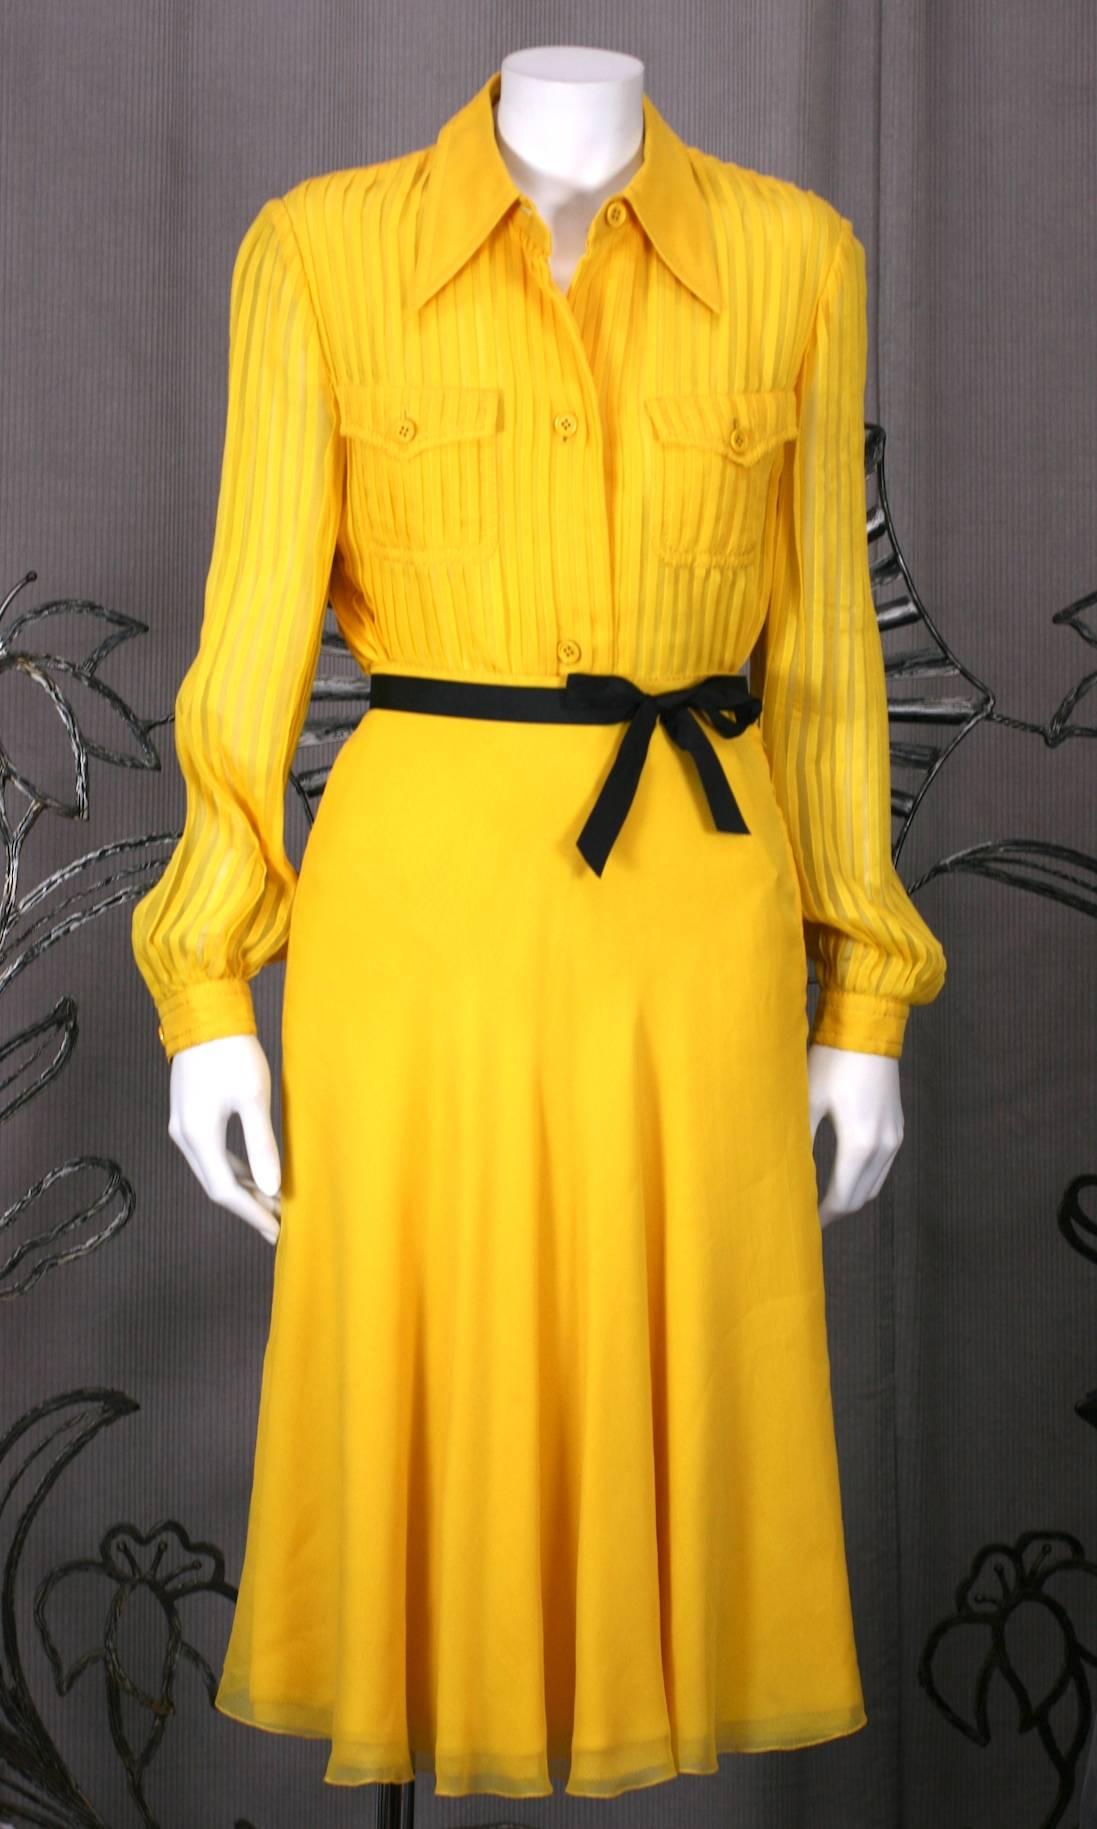 Galanos Charming Chrome Yellow Chiffon Skirt Ensemble For Sale 2